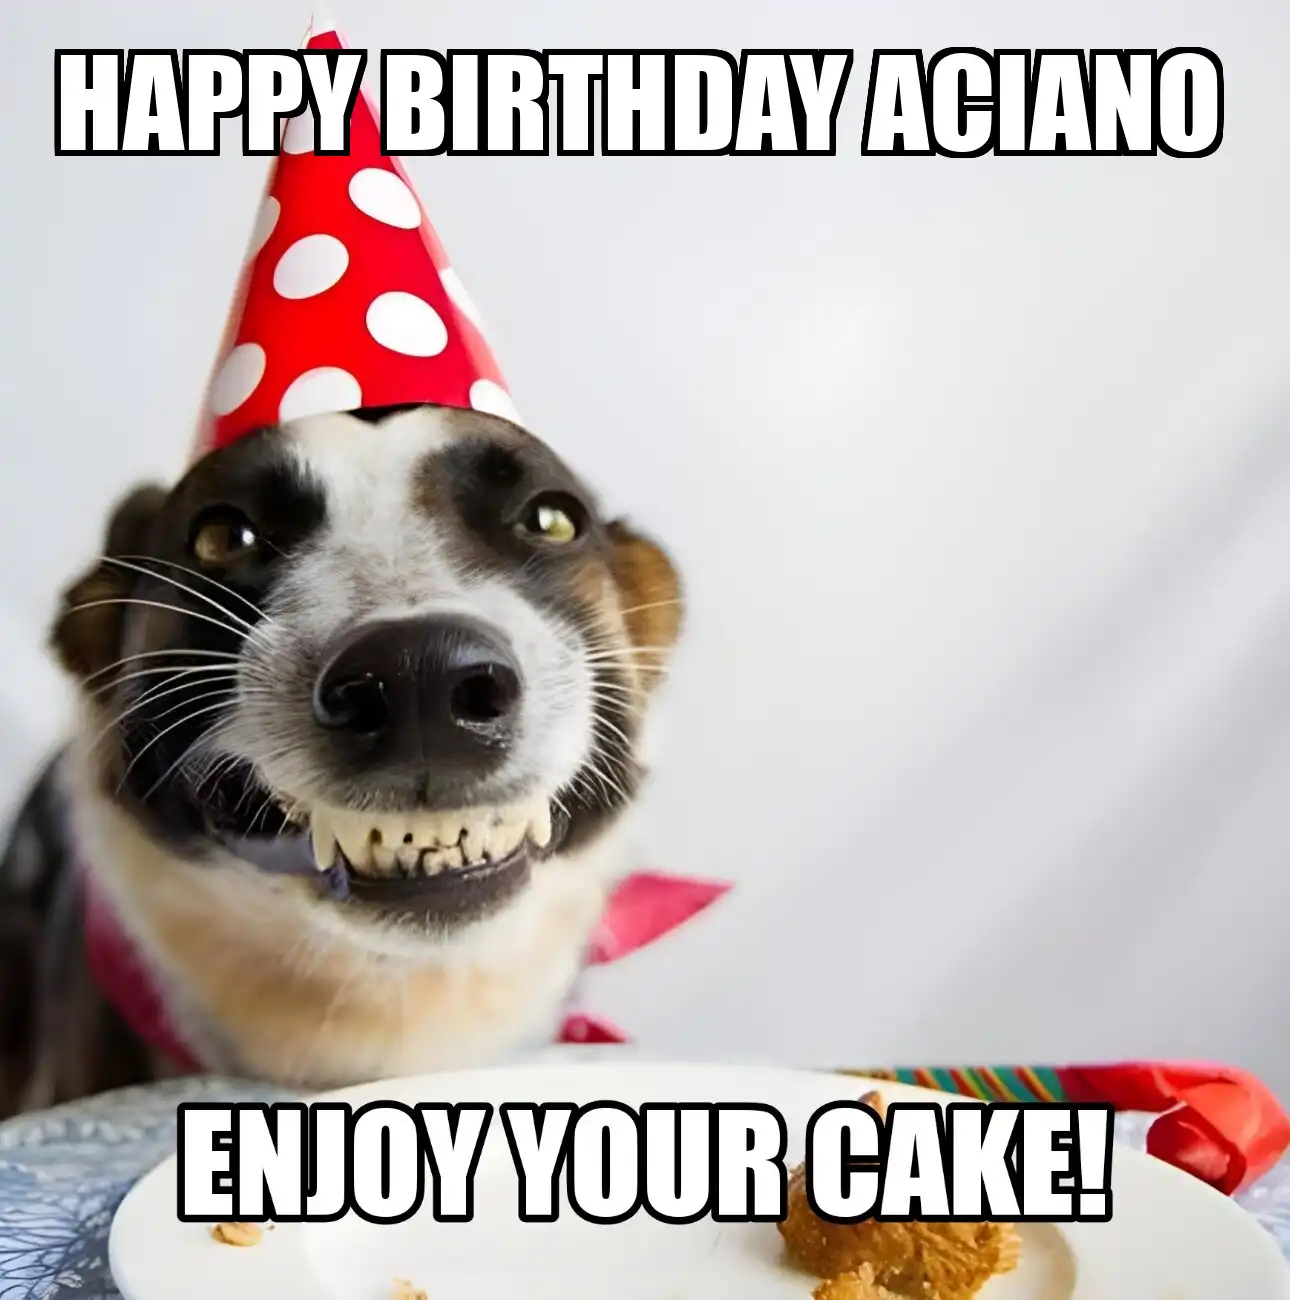 Happy Birthday Aciano Enjoy Your Cake Dog Meme